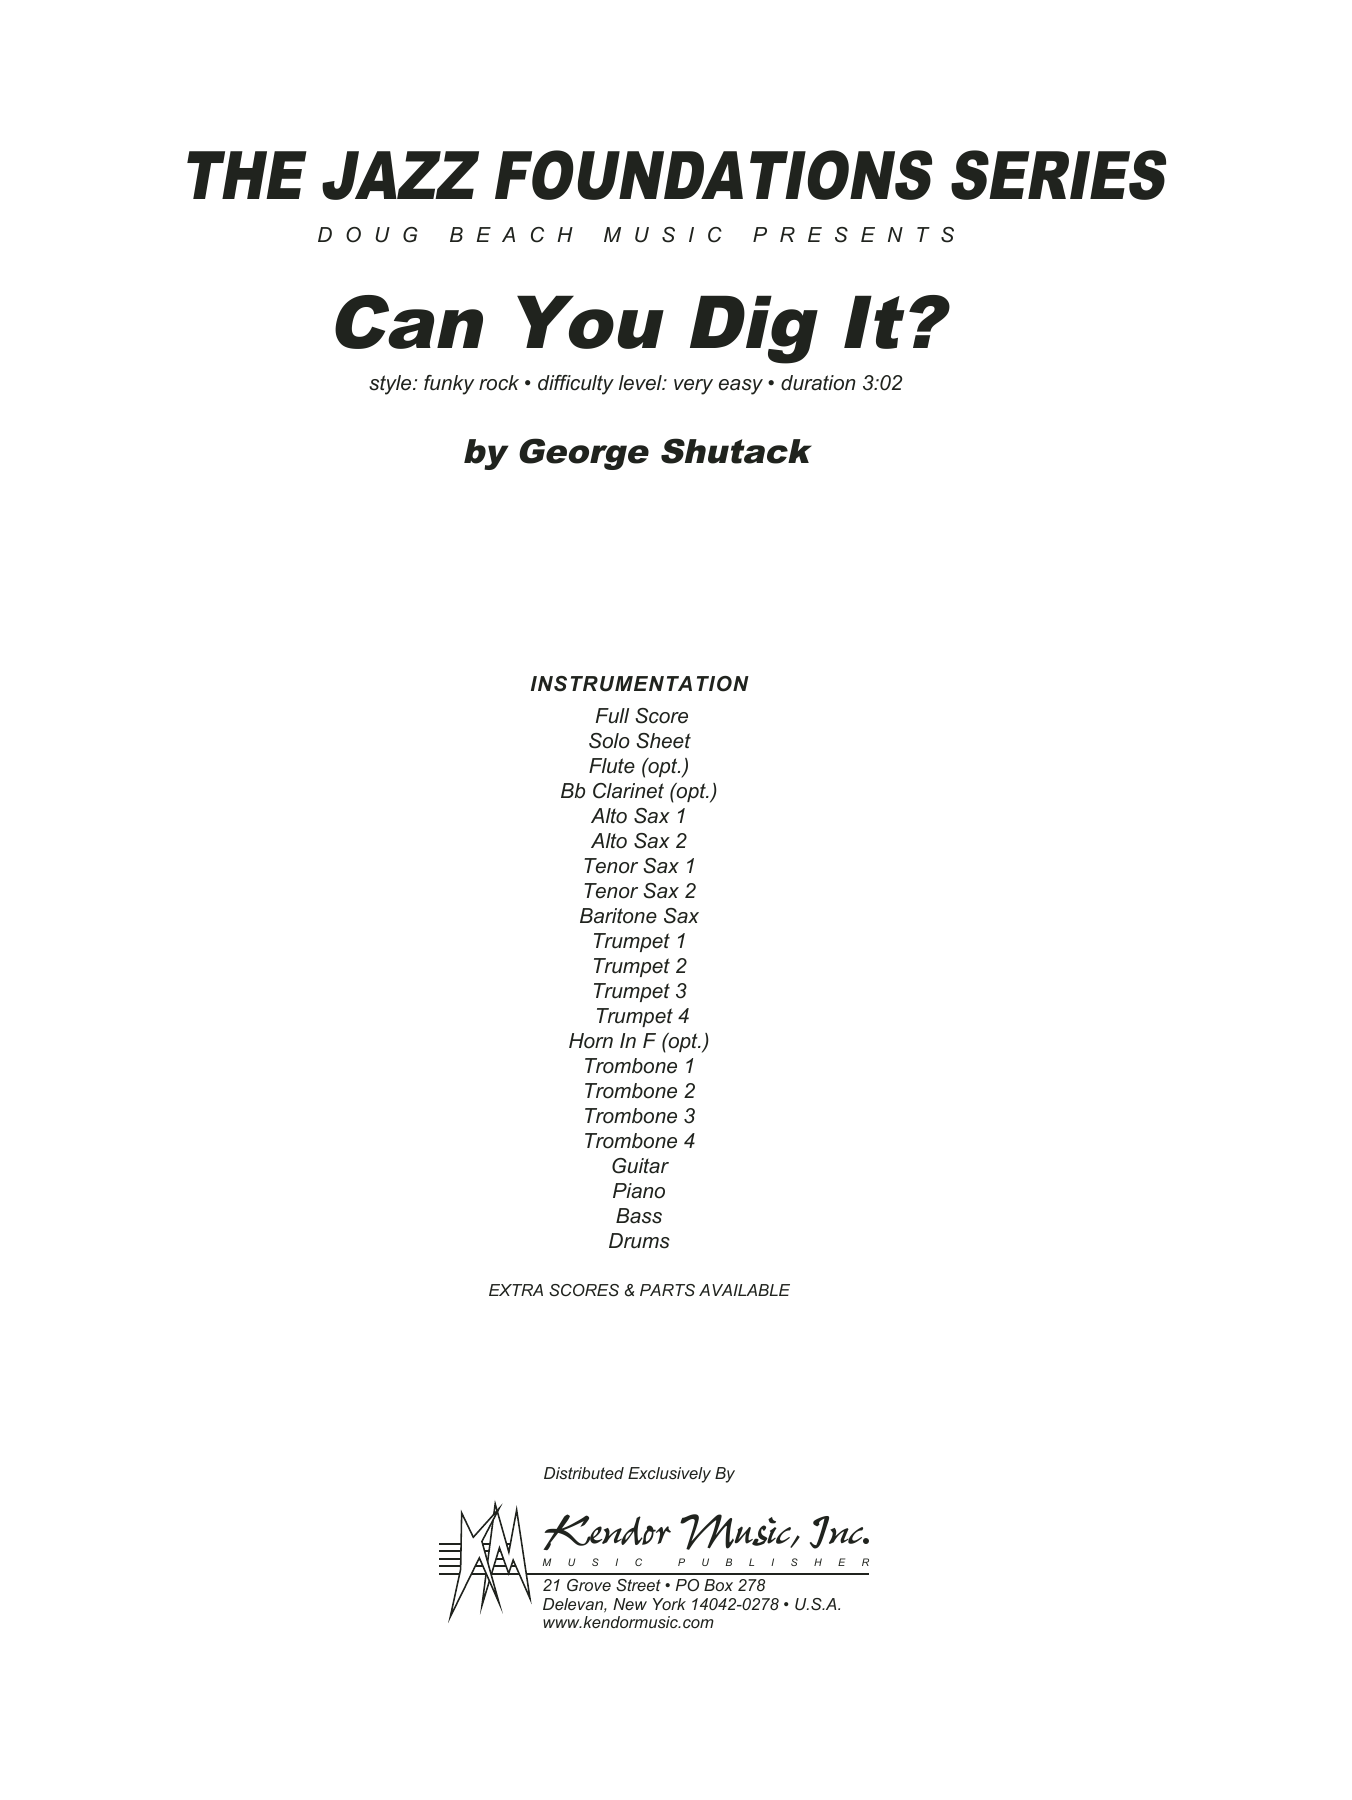 Download George Shutack Can You Dig It? - Full Score Sheet Music